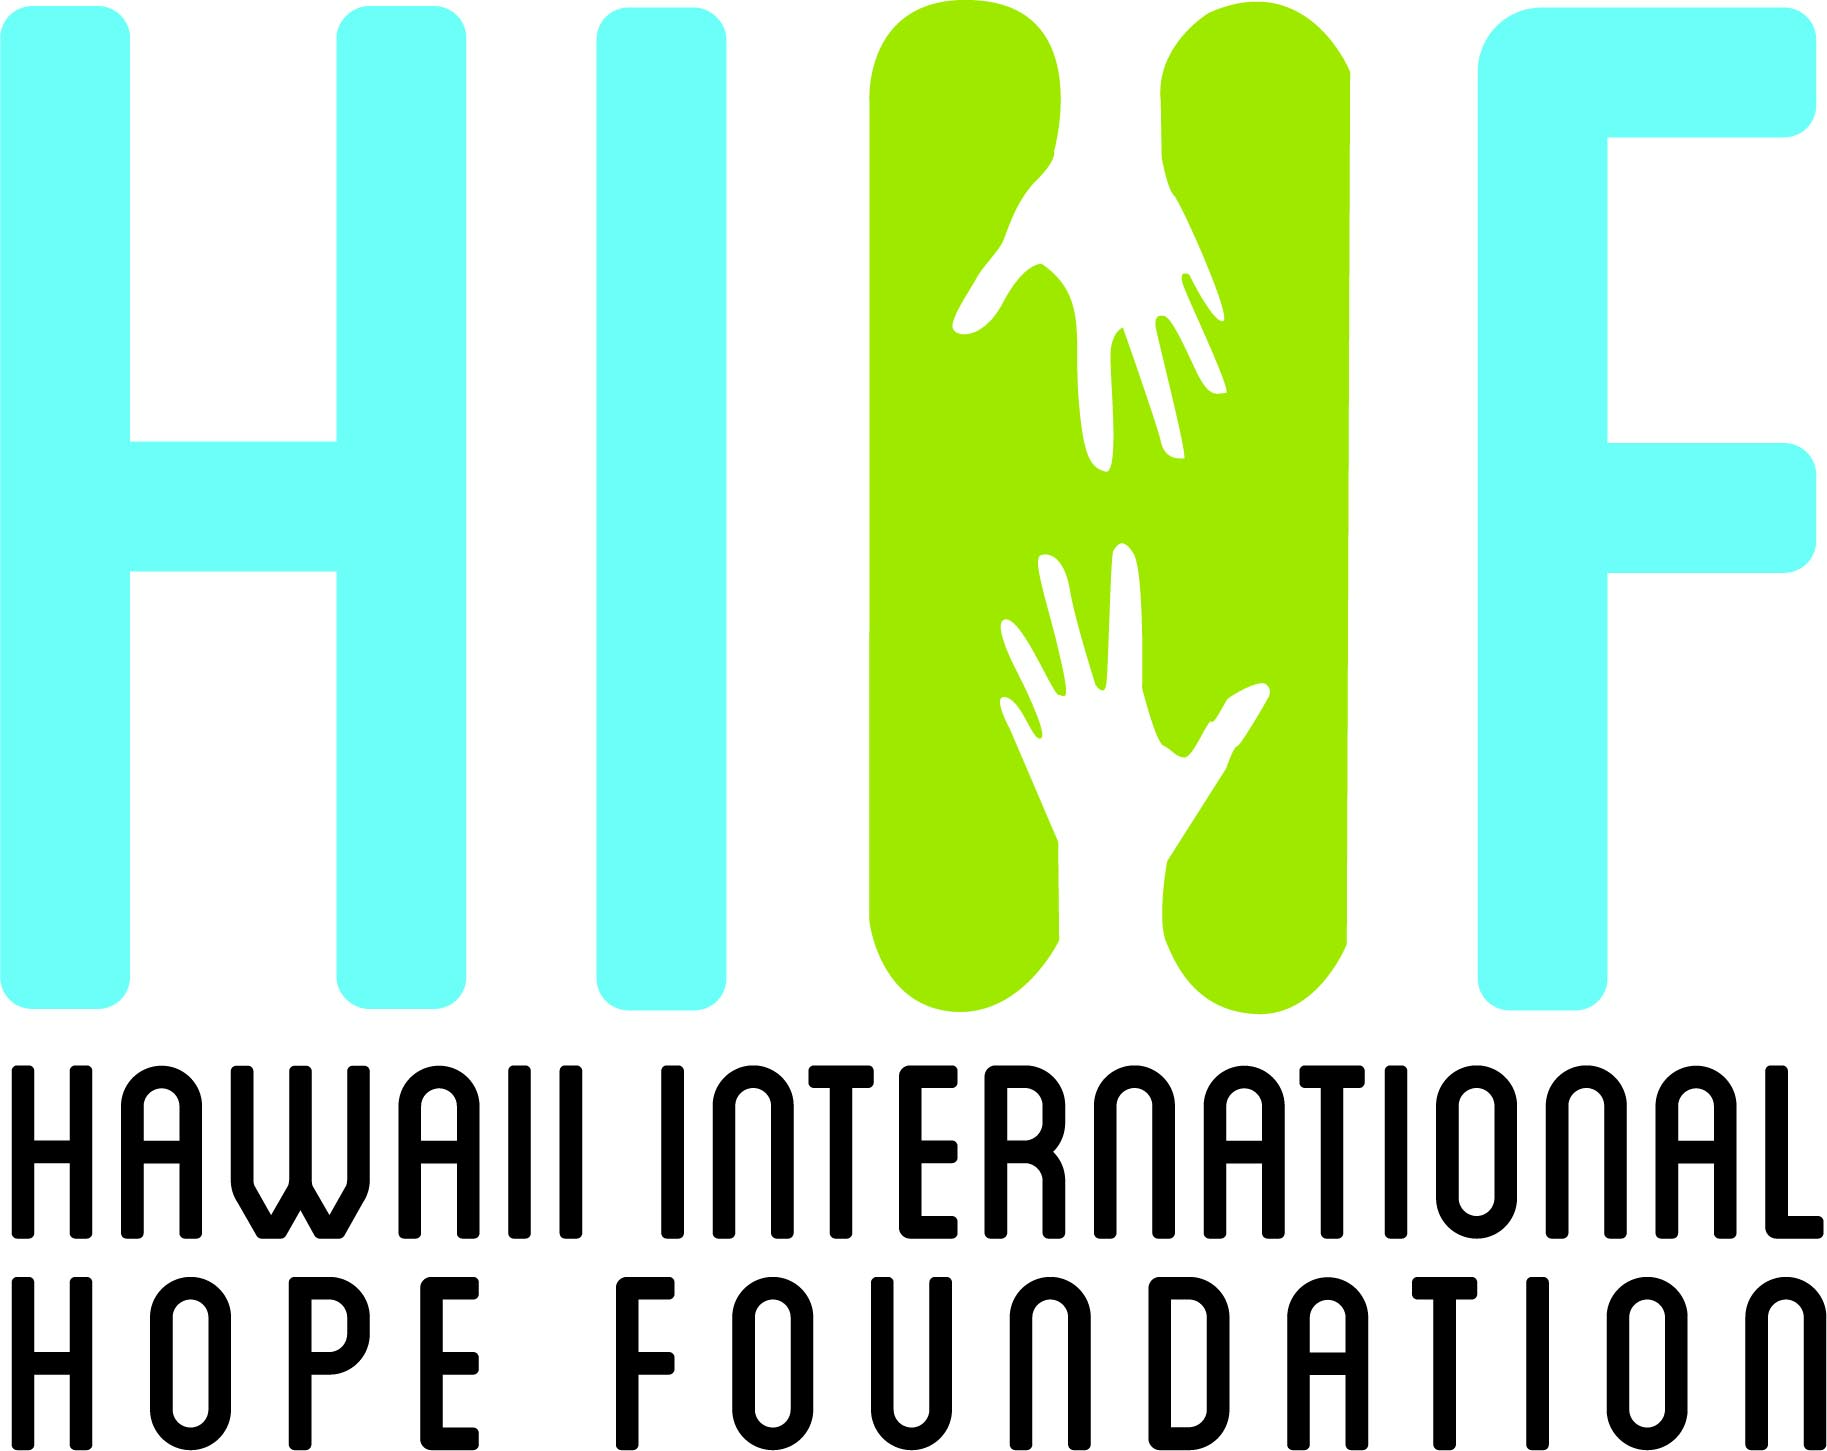 Hawaii International HOPE Foundation logo